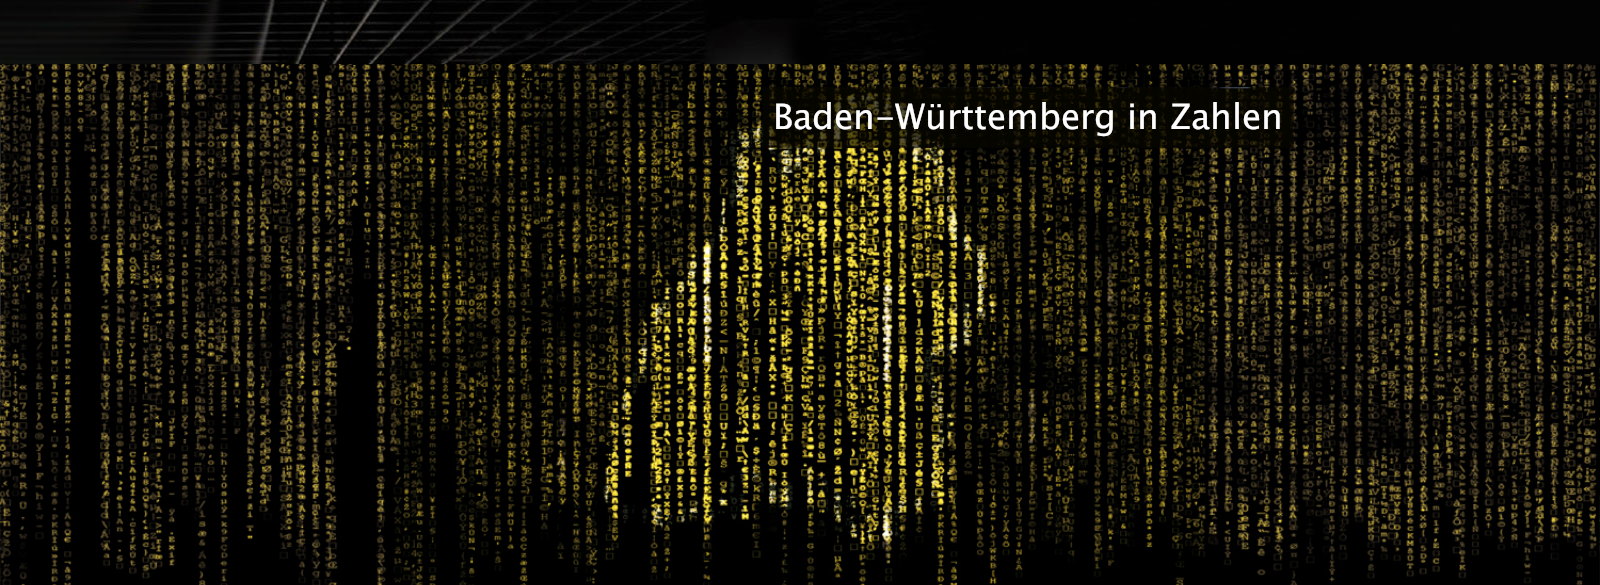 Baden-Württemberg in Zahlen